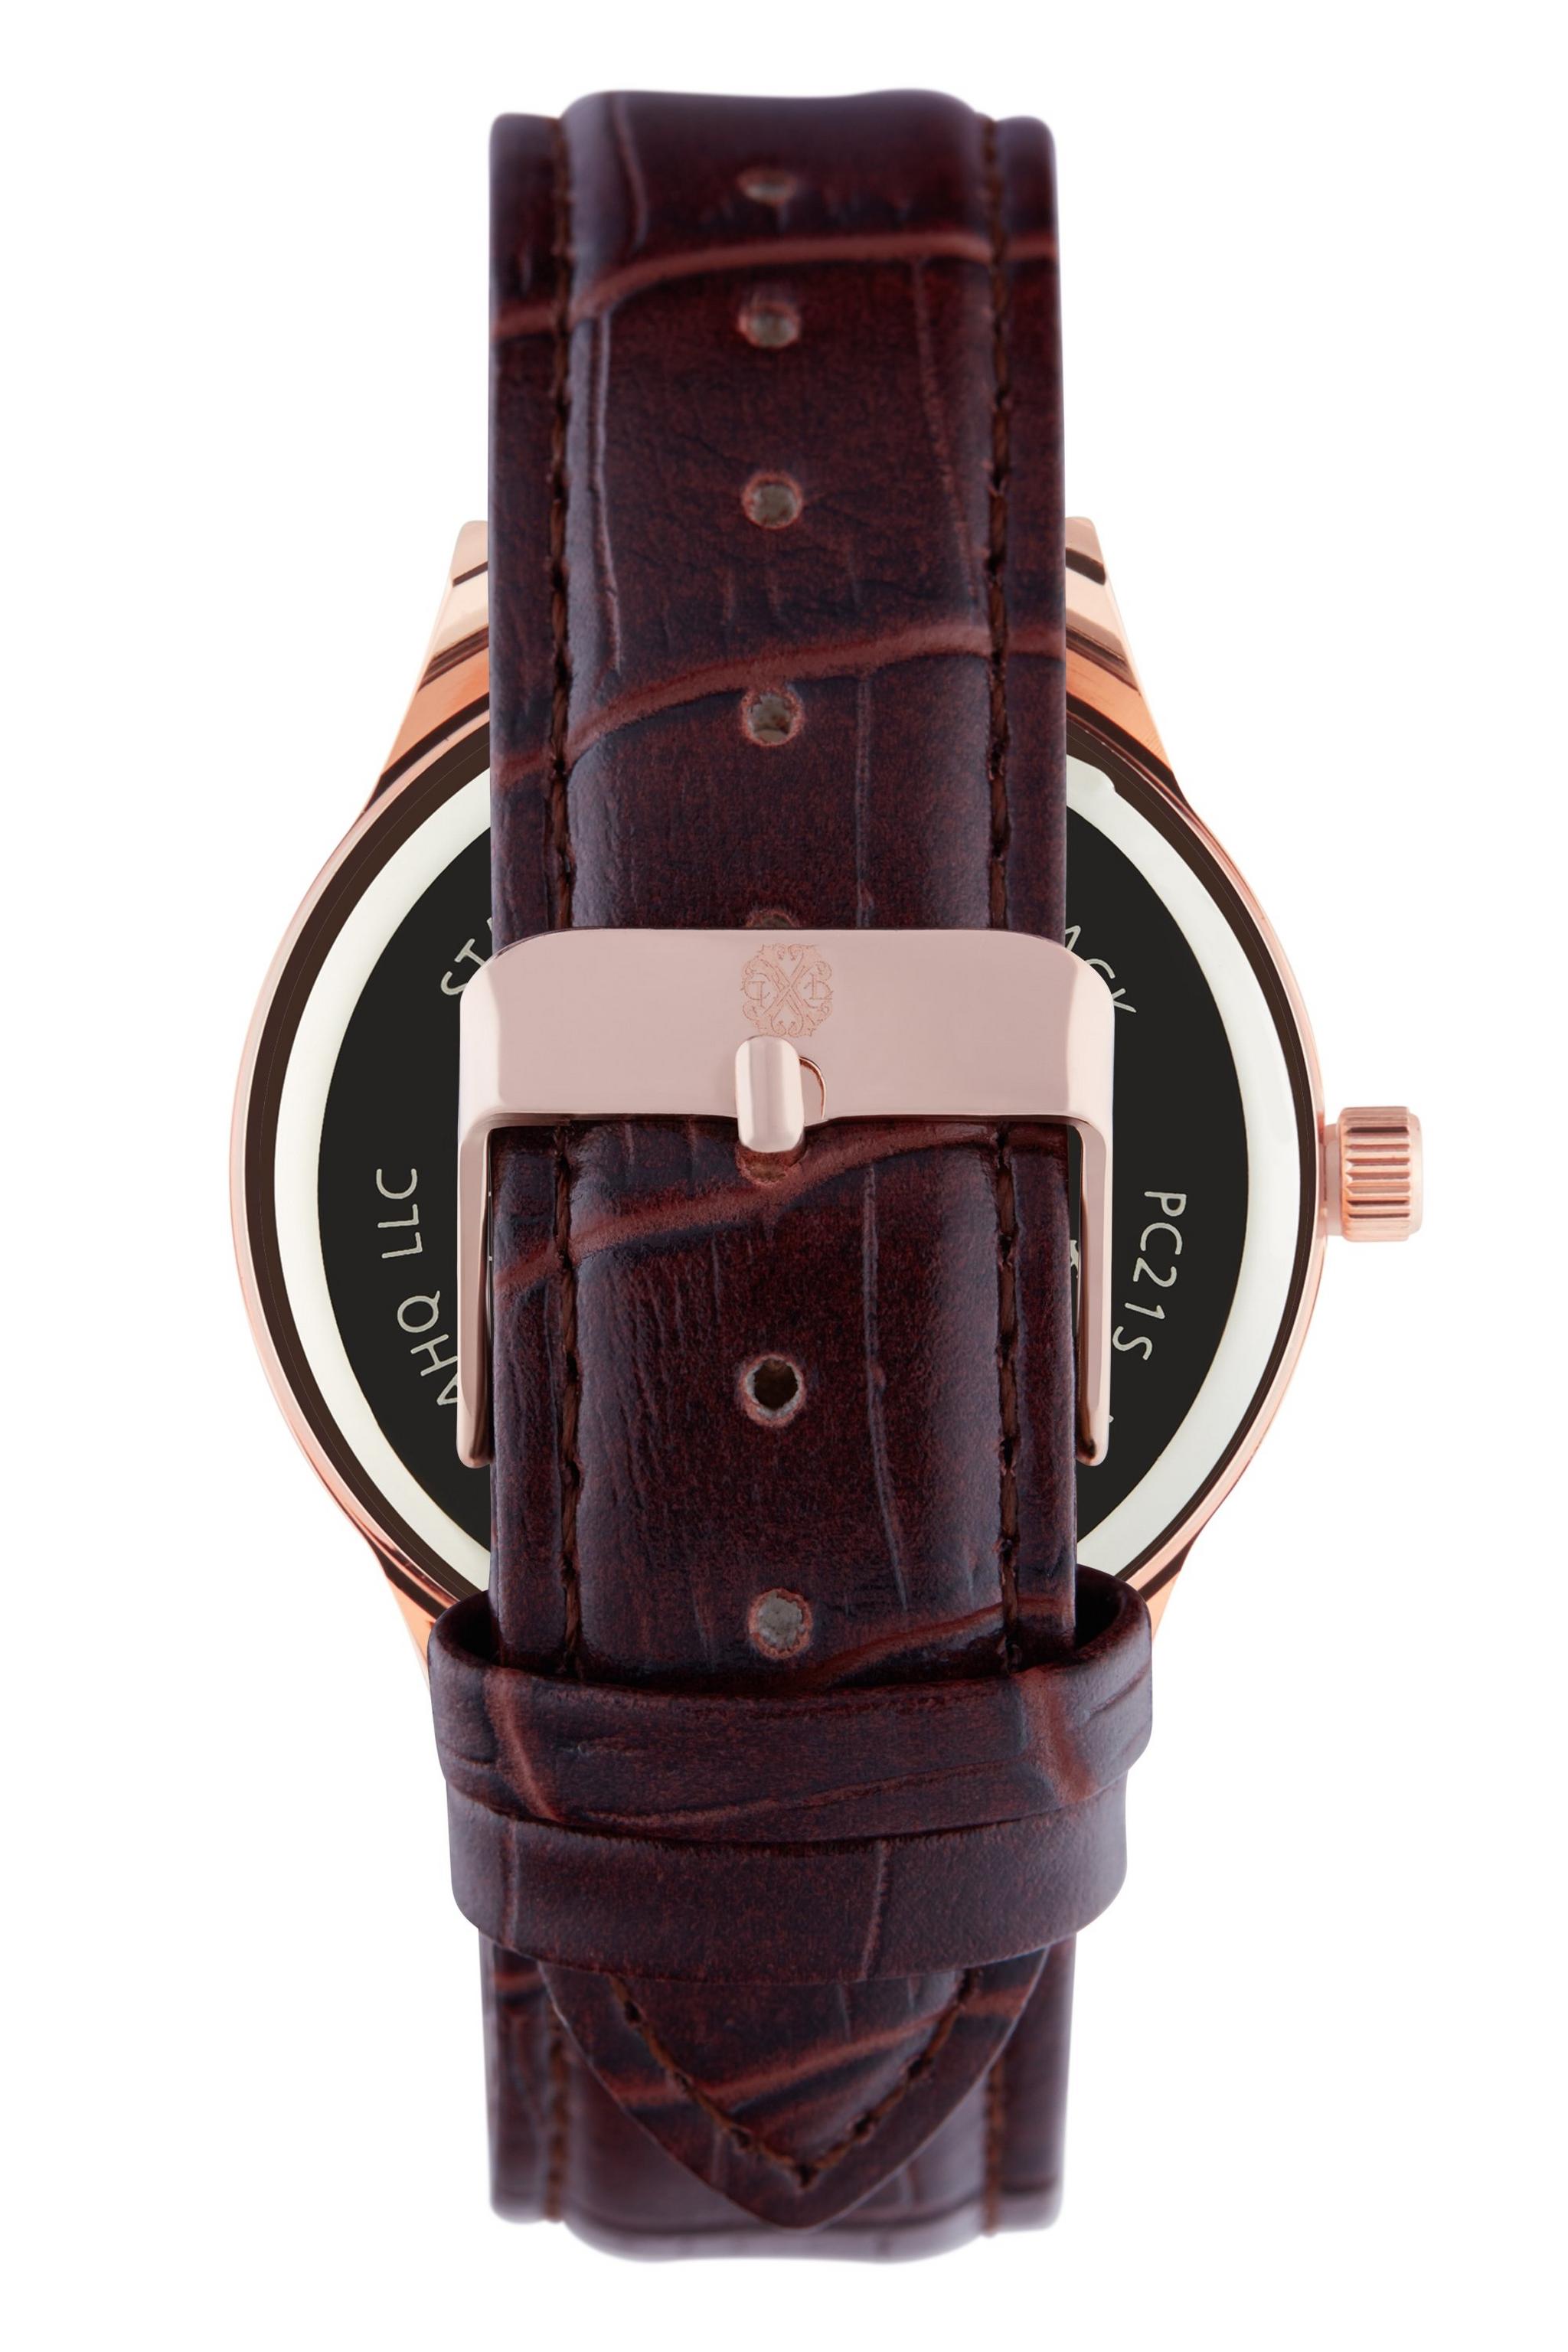 Christian Lacroix 40mm Analog Gents' Leather Watch - CXLS18003